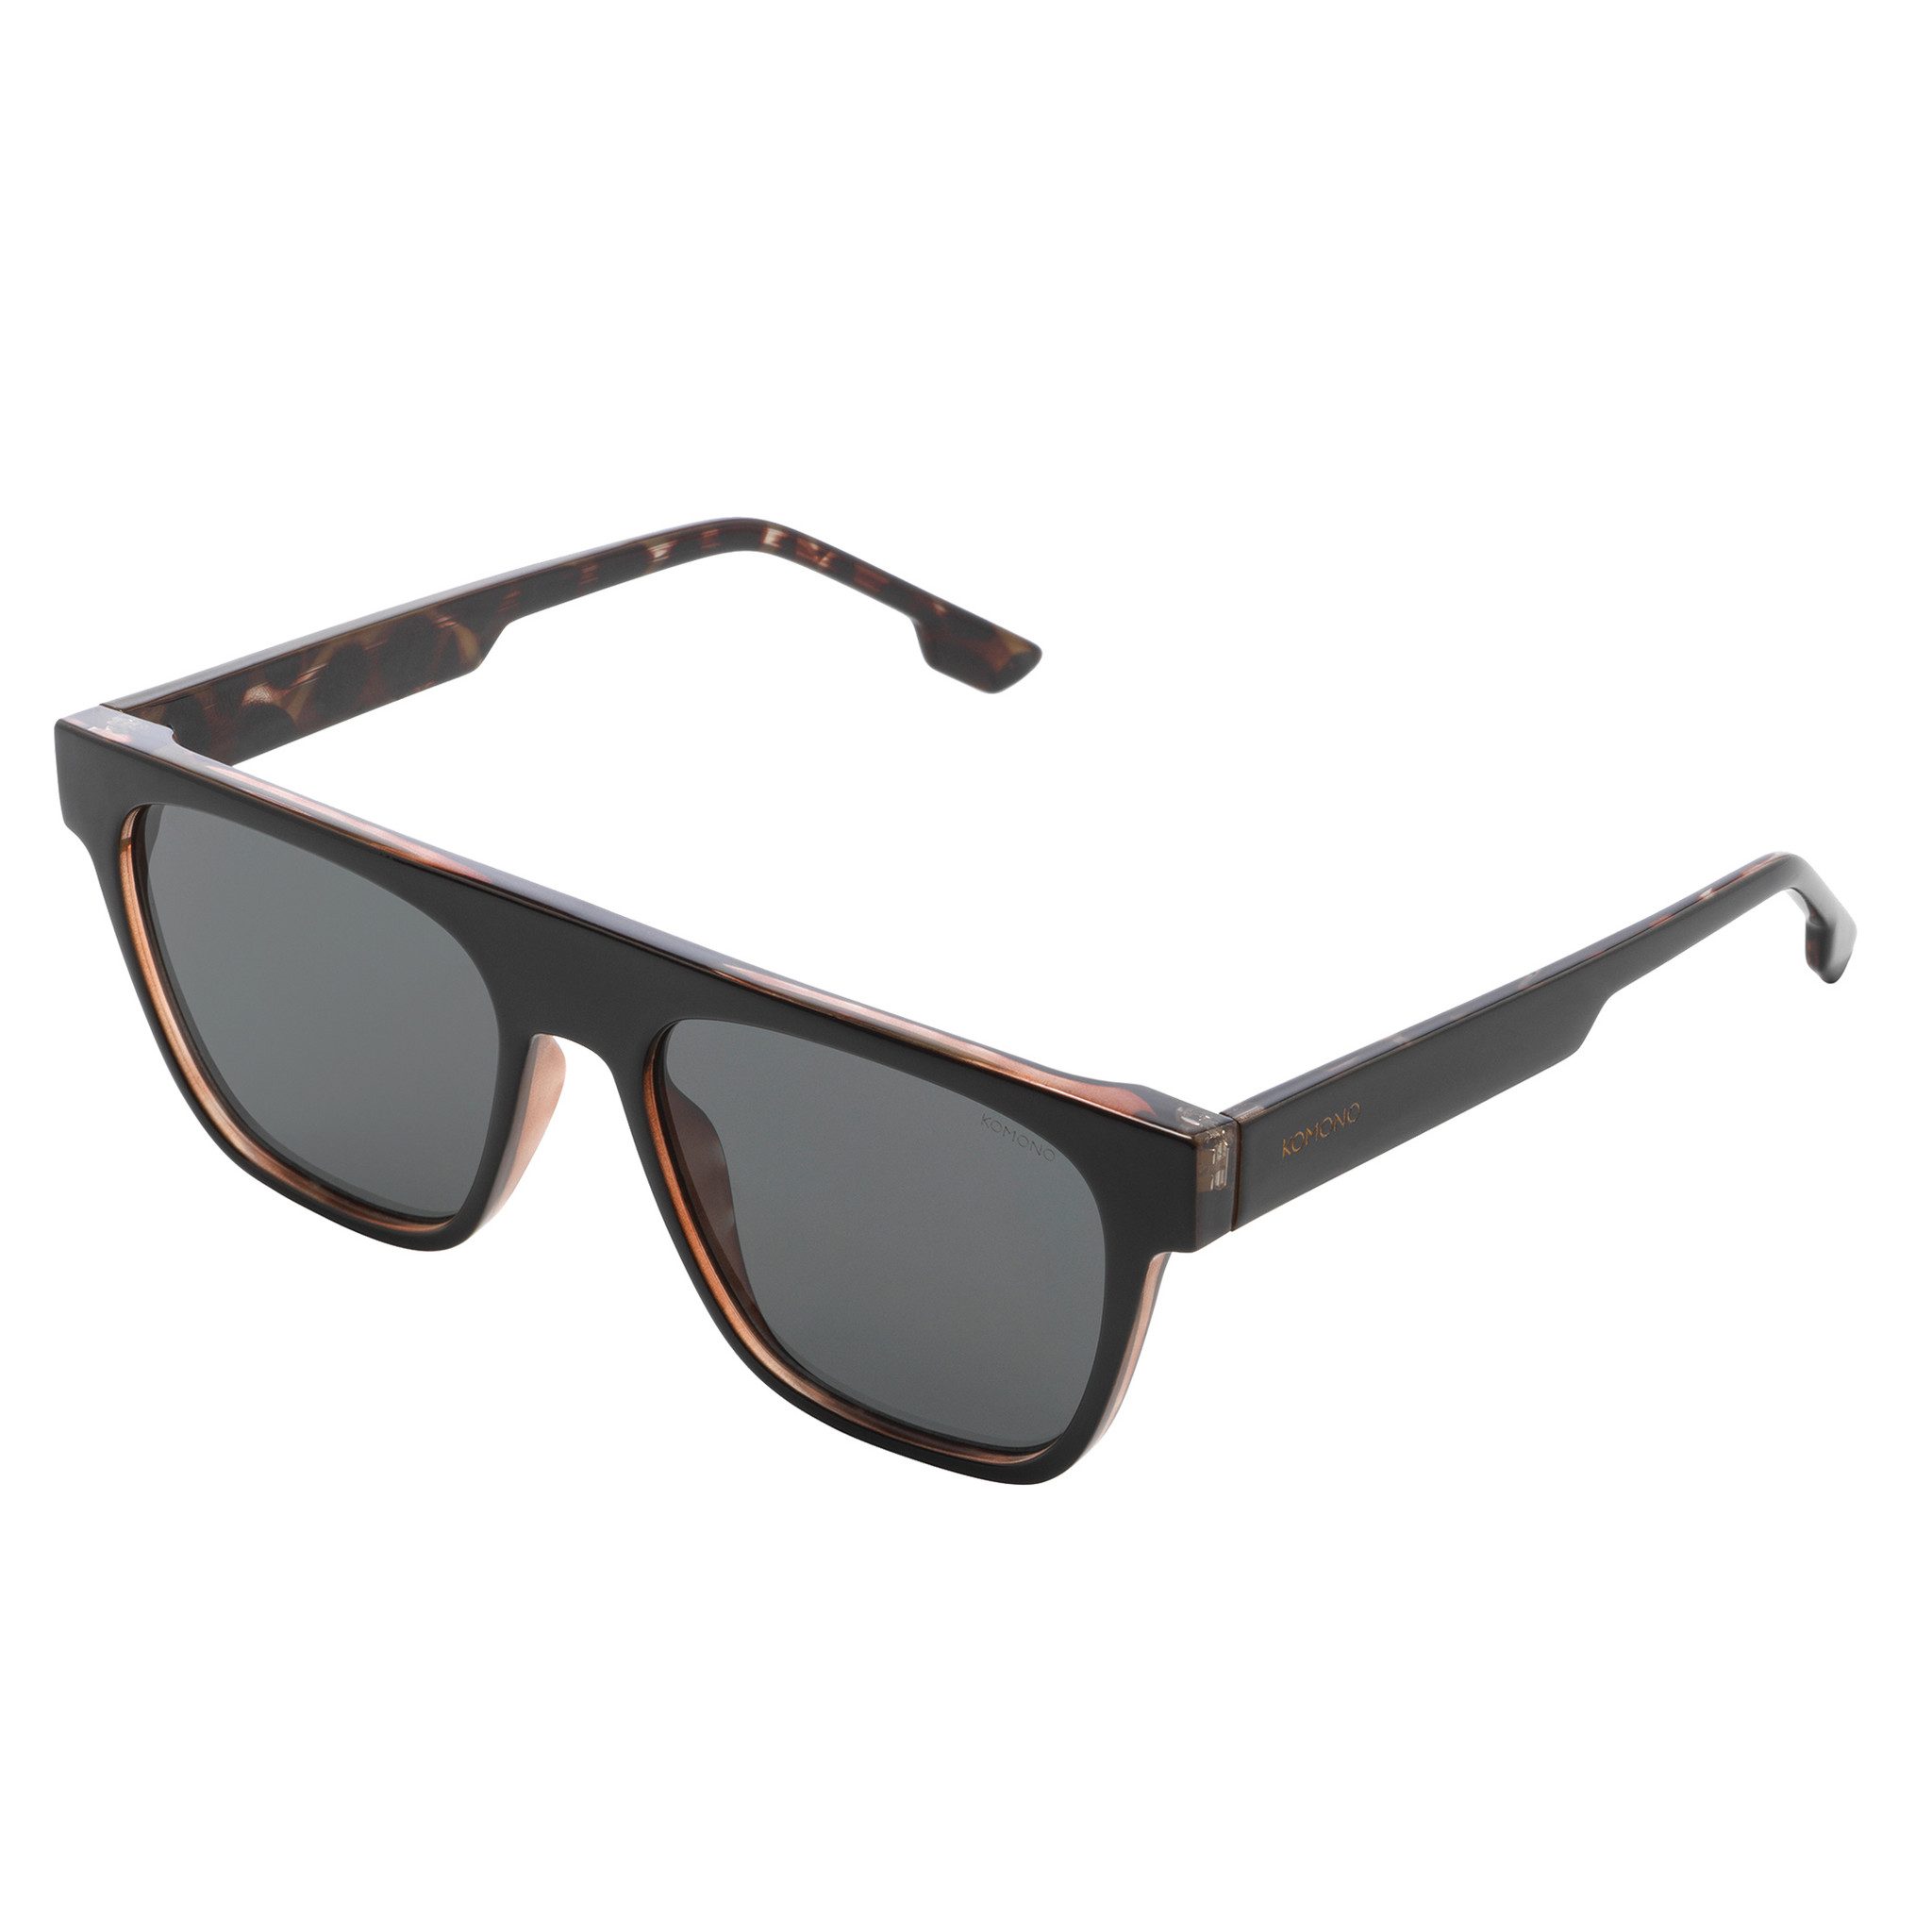 Komono Joe Black Tortoise Sunglasses - FREE 24h delivery!* - Thunderkraft